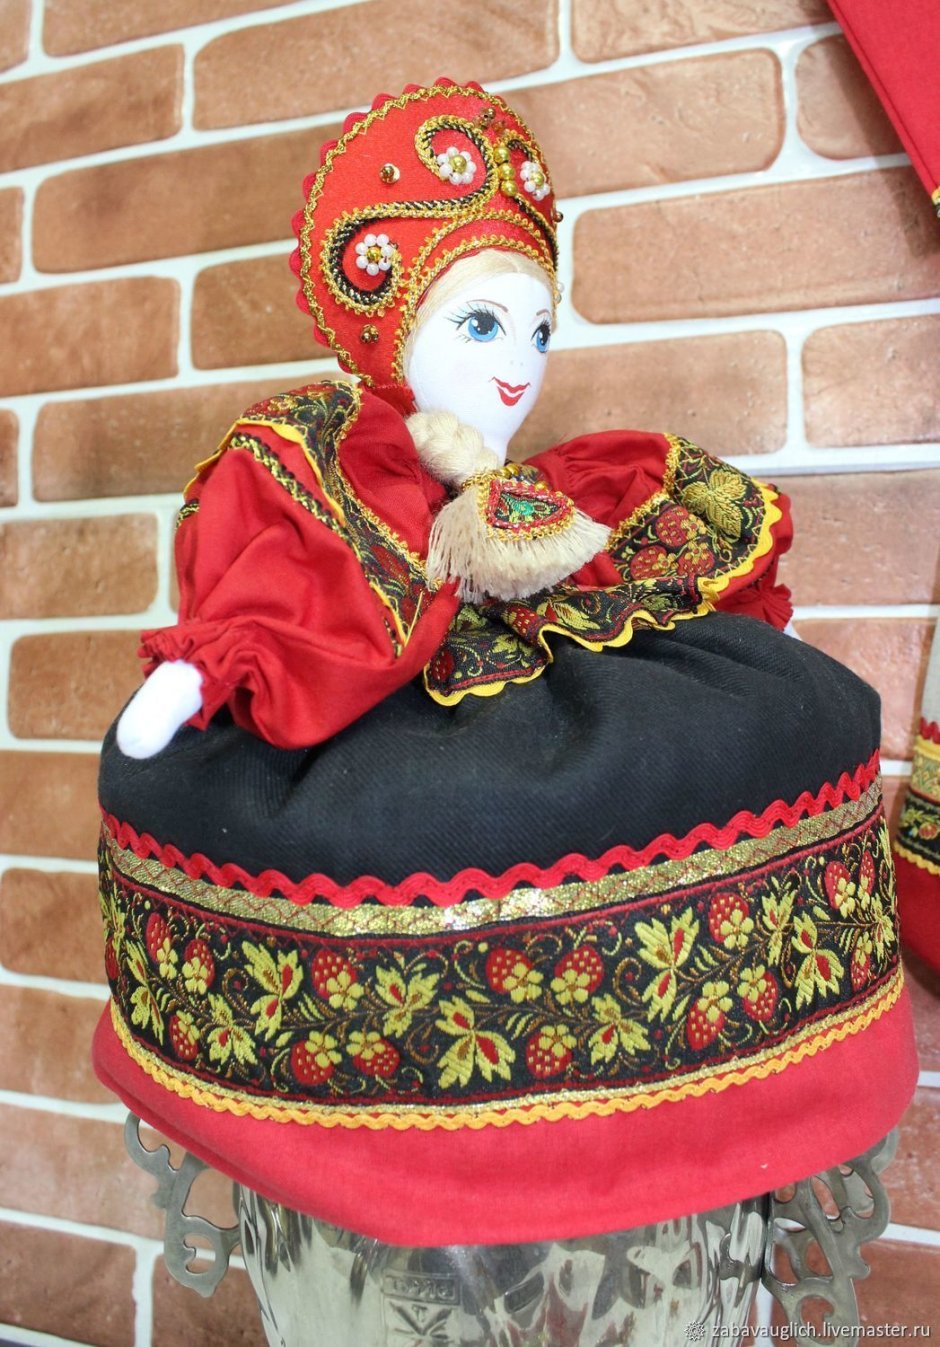 Кукла на заварочный чайник